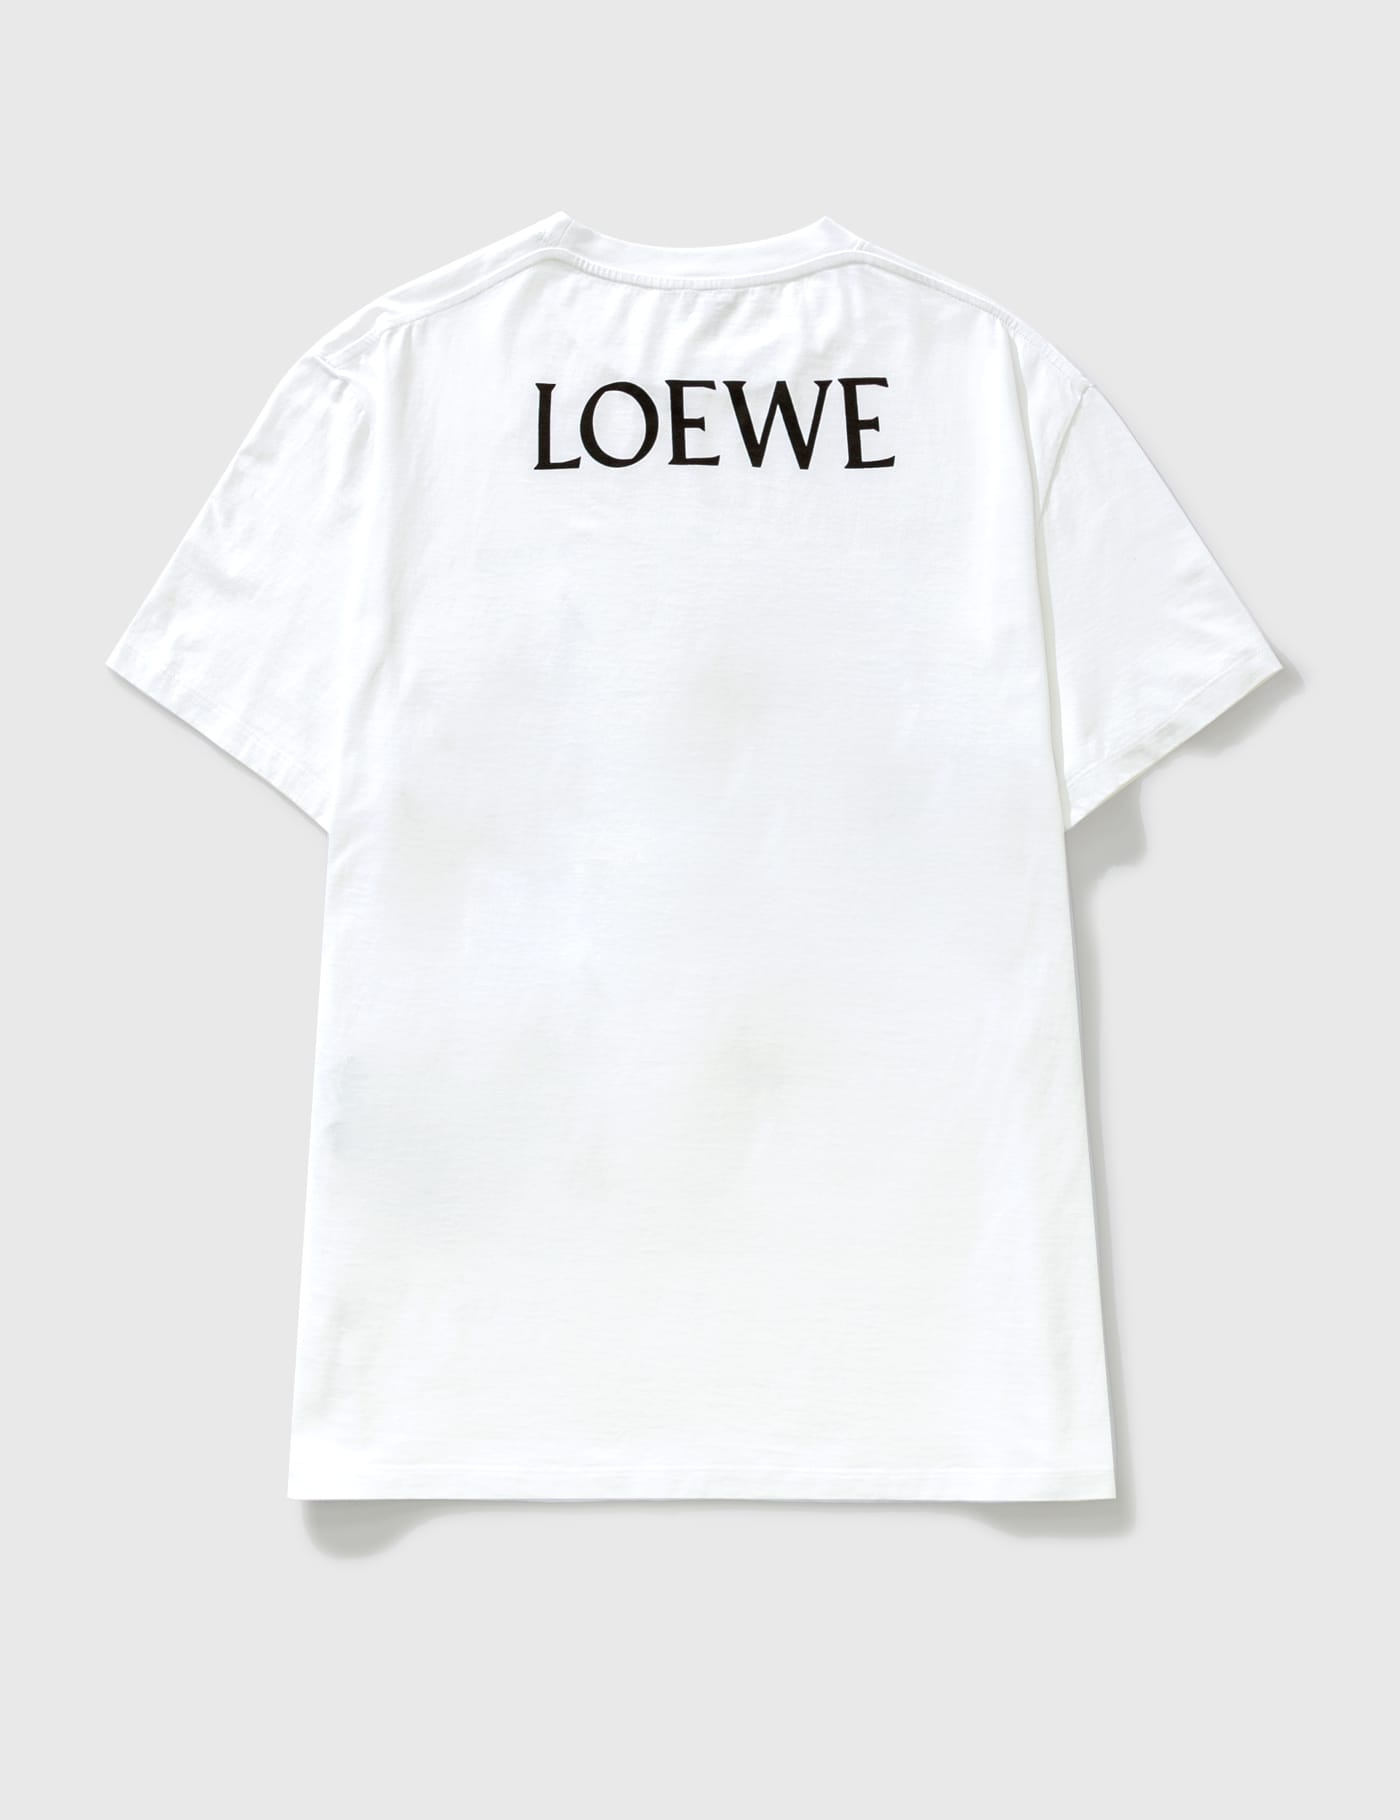 Loewe - Pizza Print T-shirt | HBX - HYPEBEAST 為您搜羅全球潮流時尚品牌